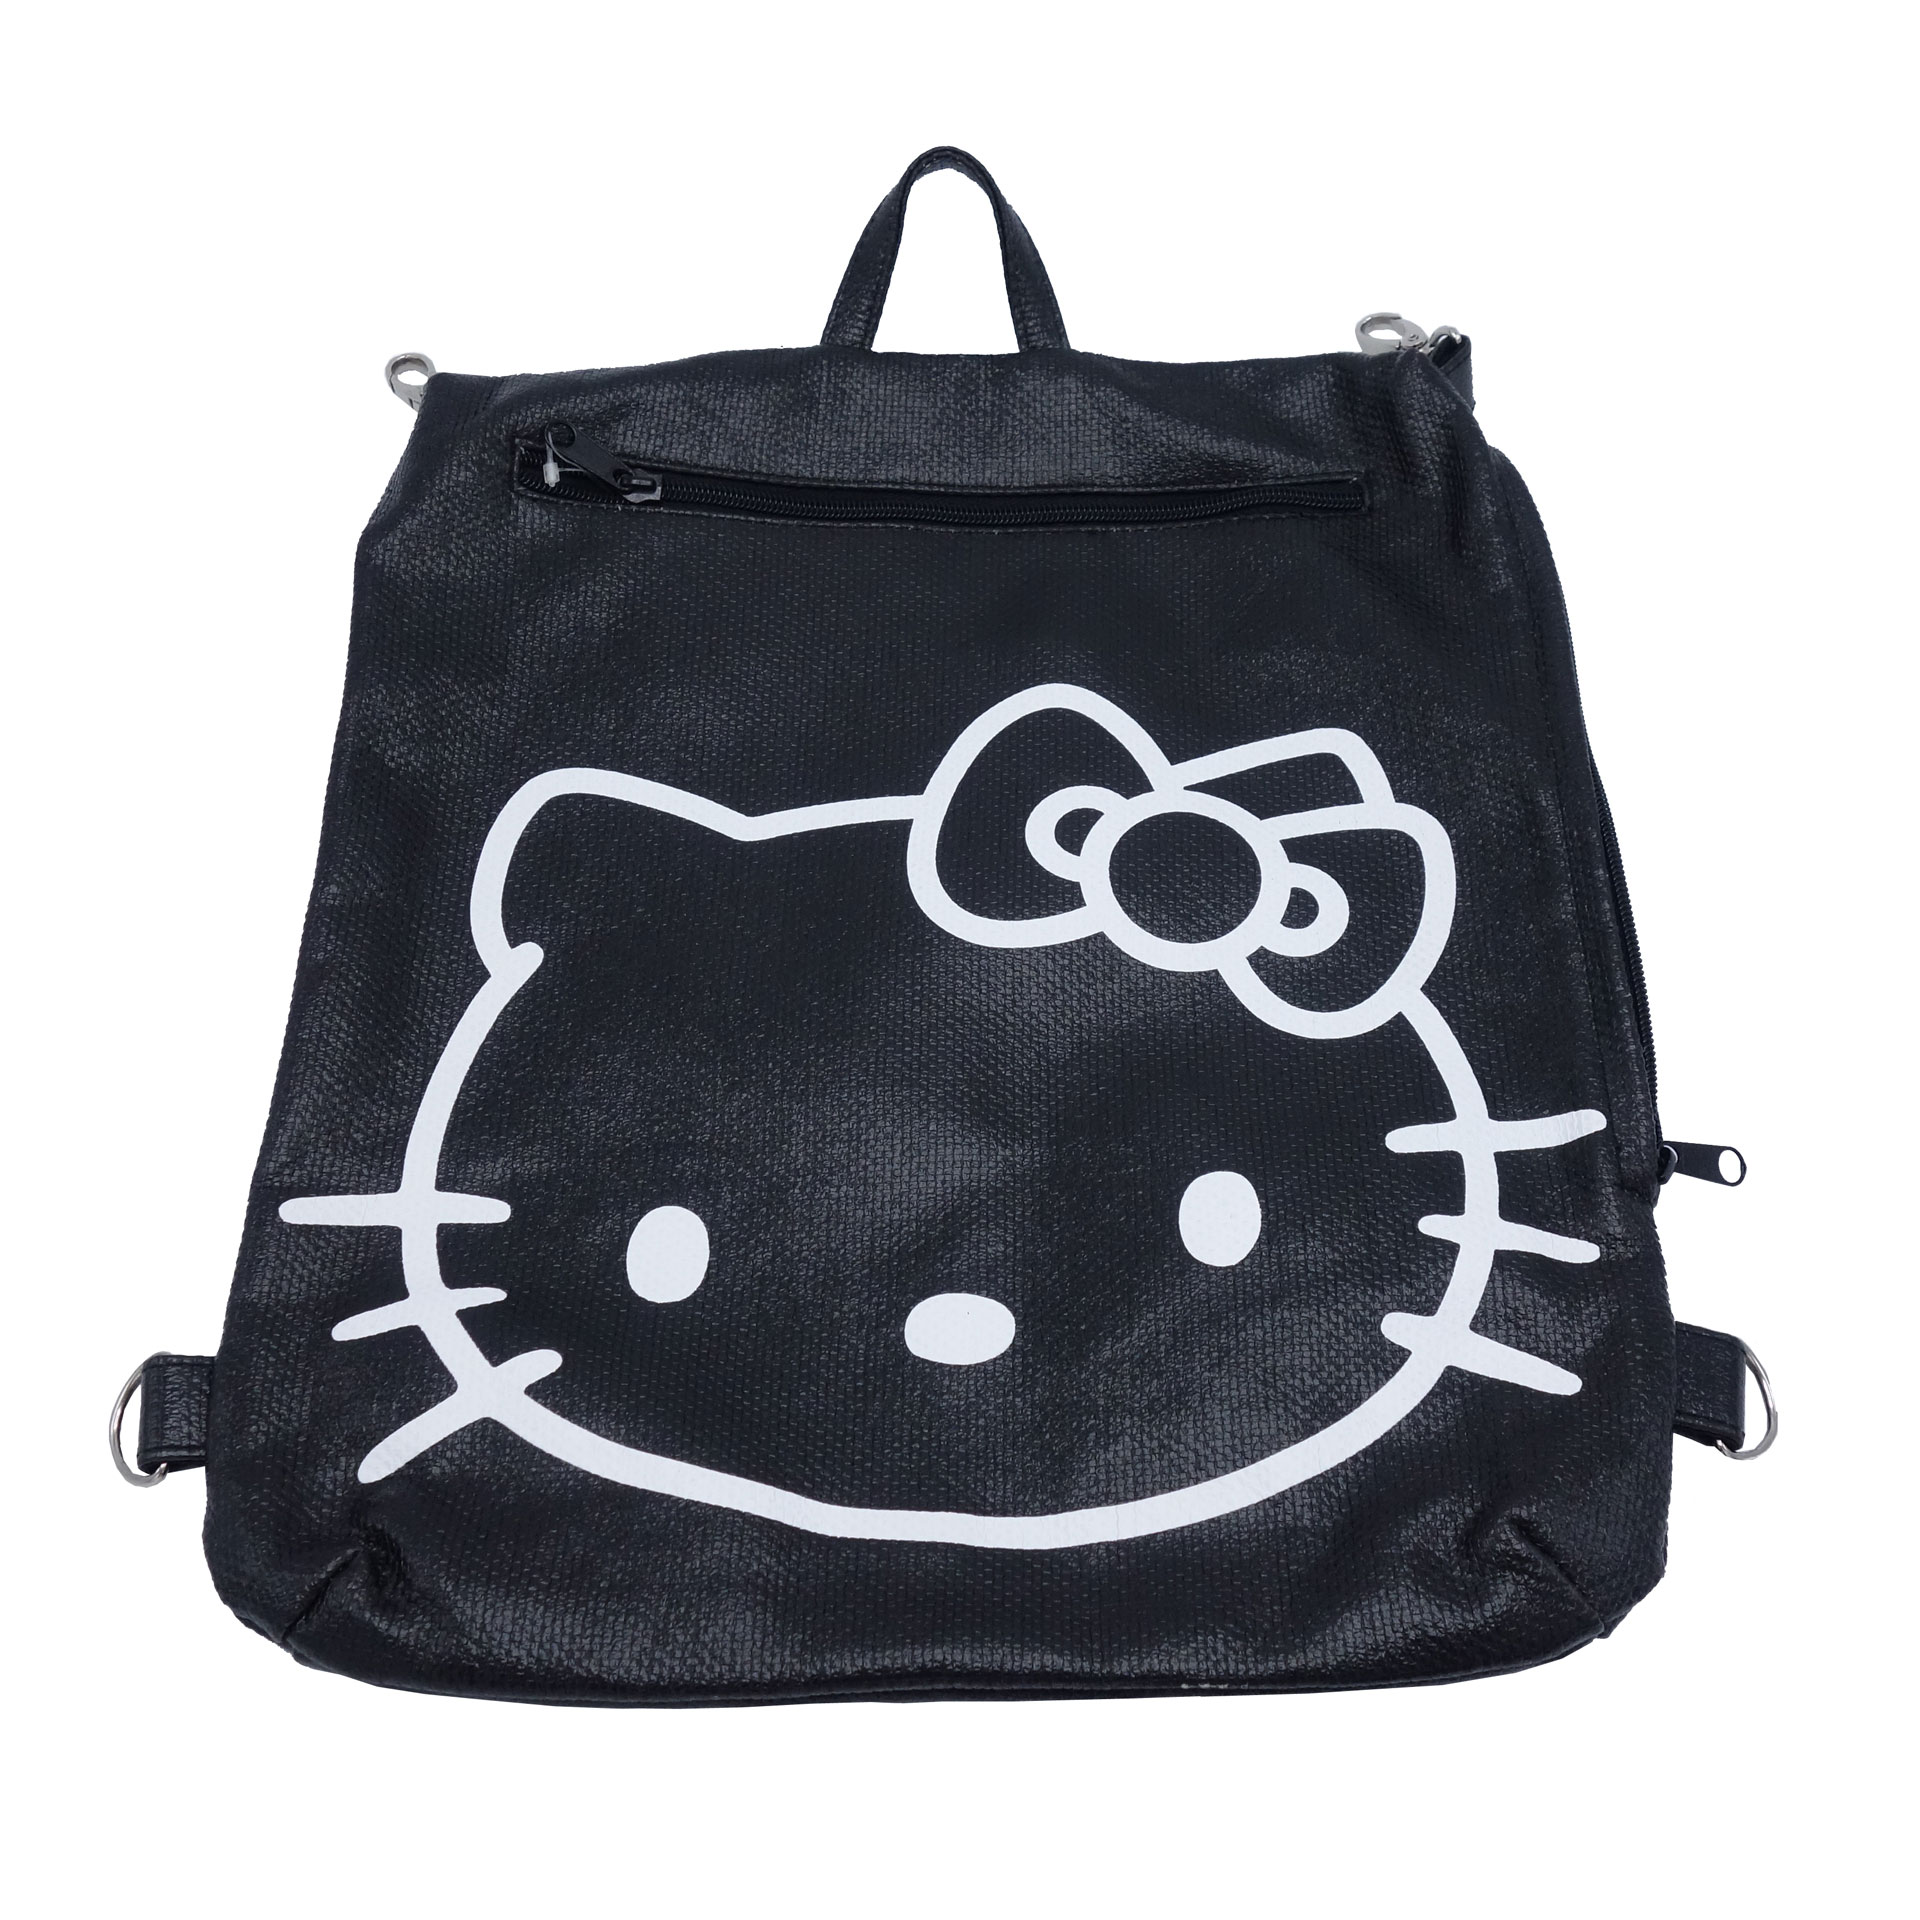 Hello Kitty 2-Way Bag black